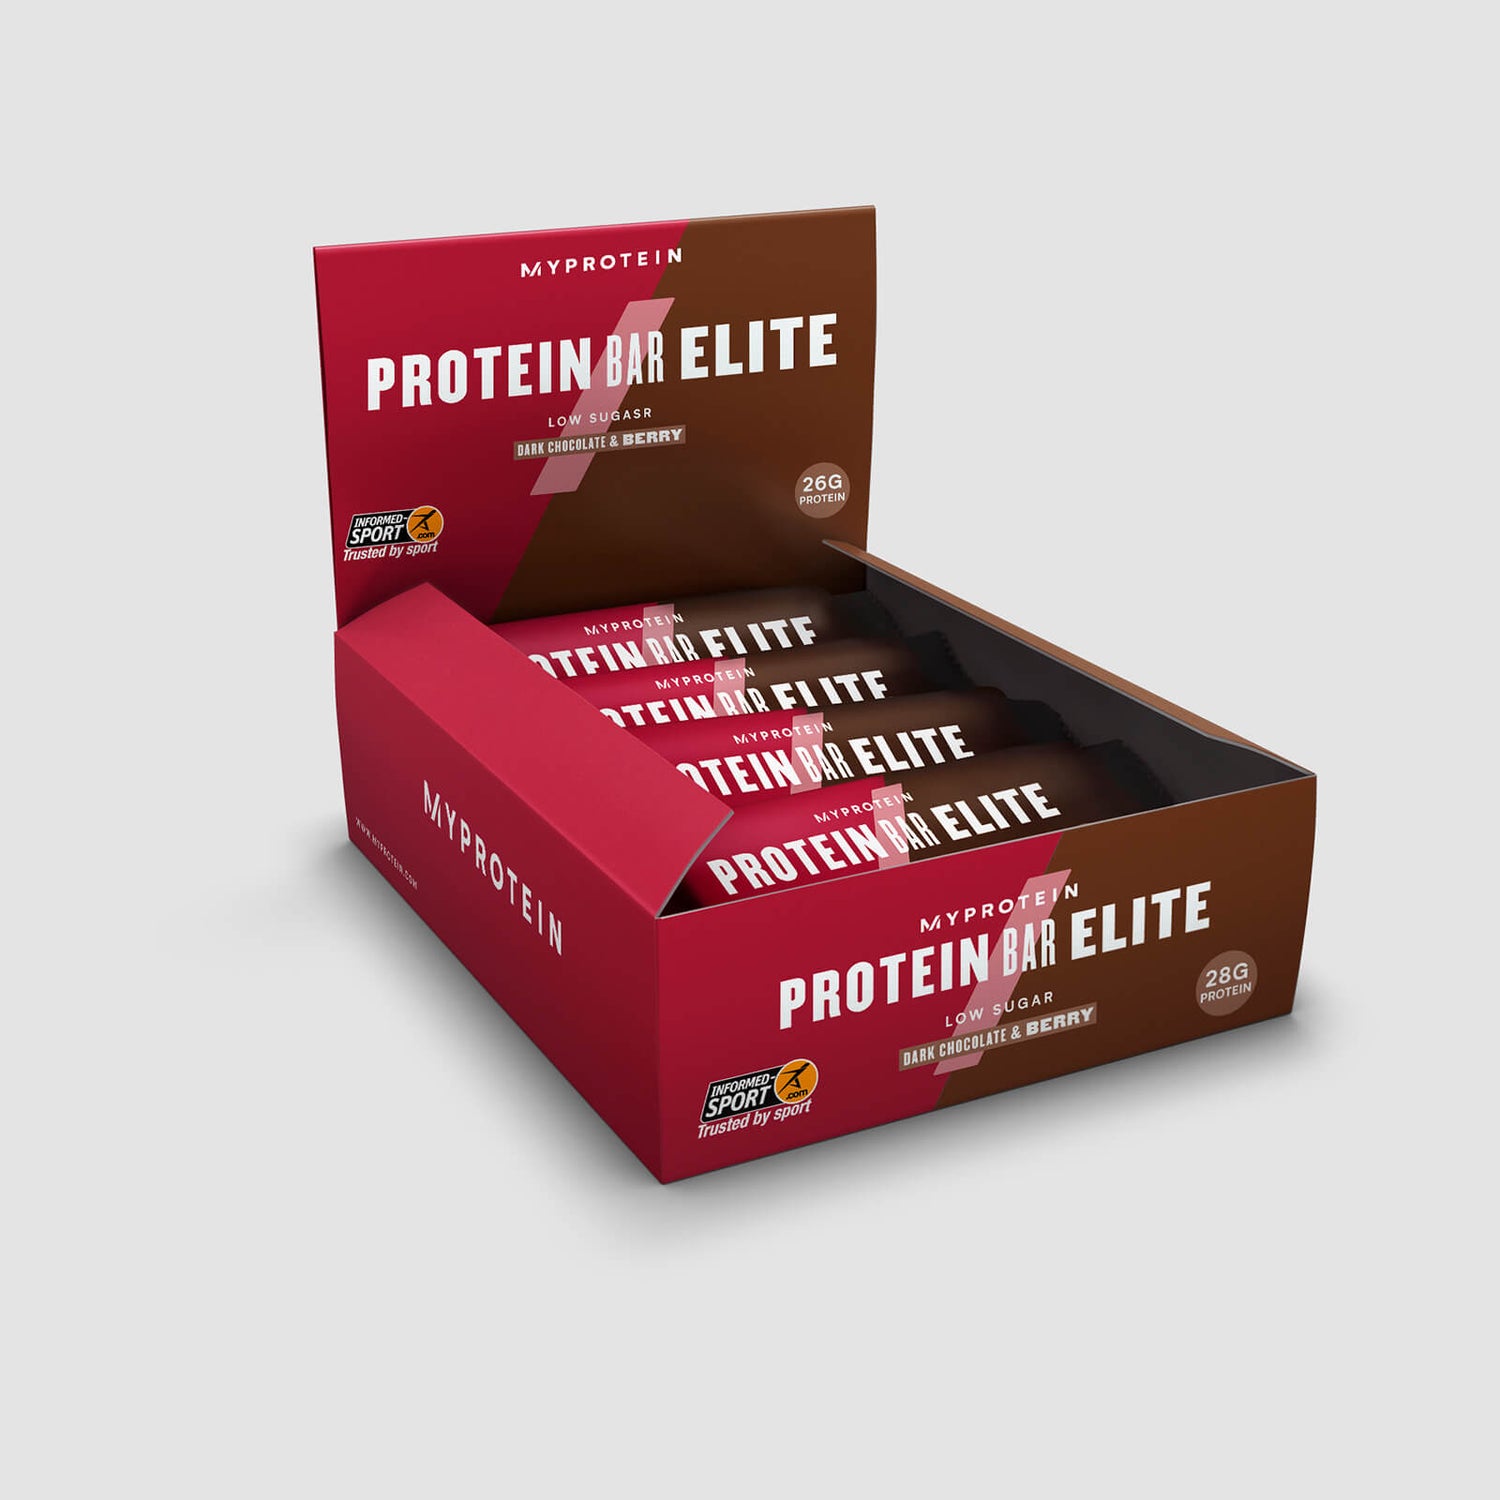 Proteinbar Elite